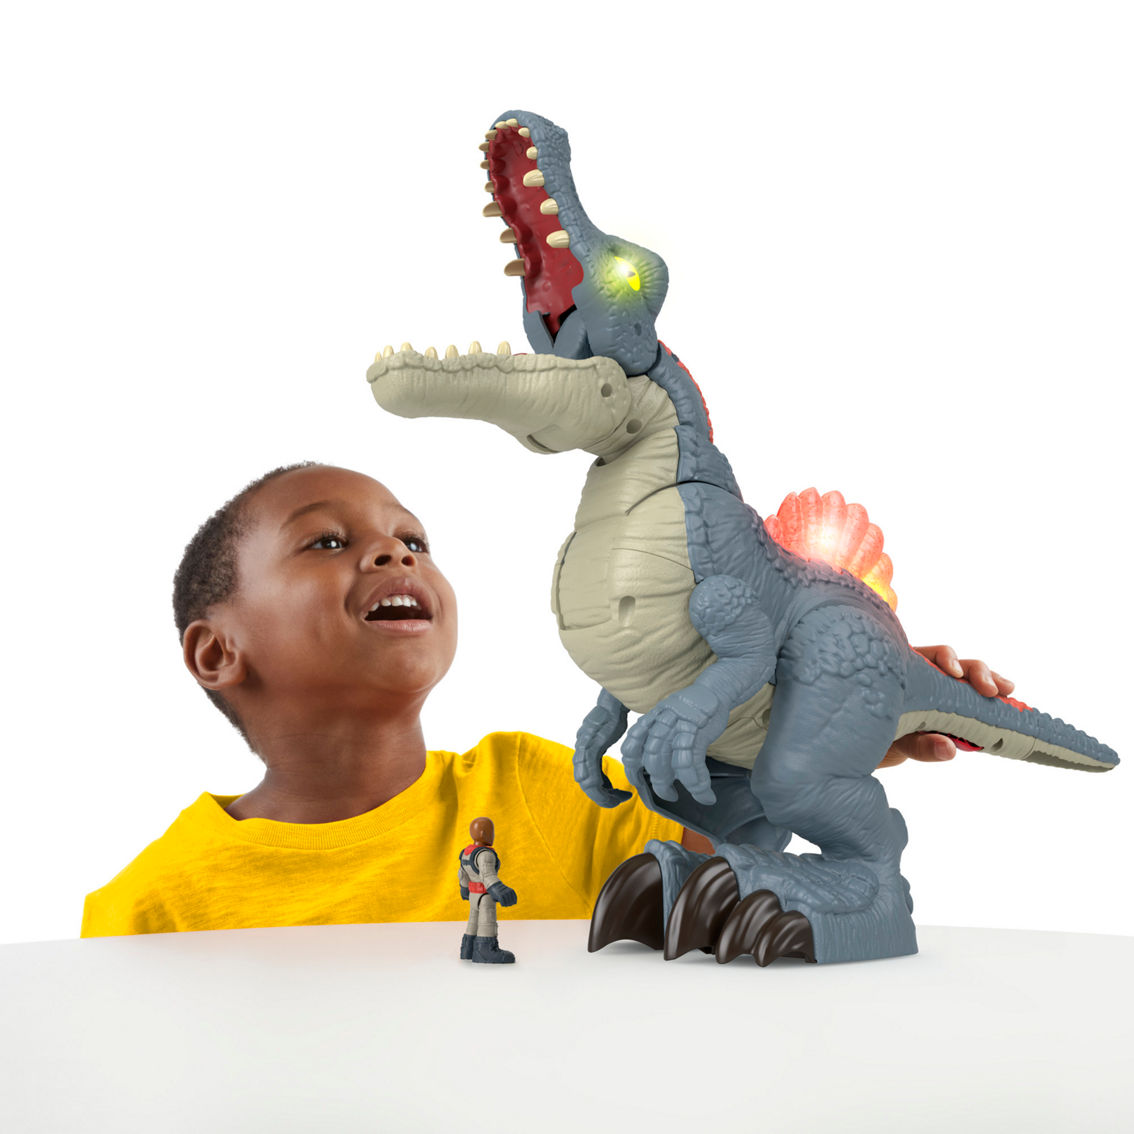 Fisher-Price Imaginext Jurassic World Spinosaurus Dinosaur Toy - Image 6 of 6